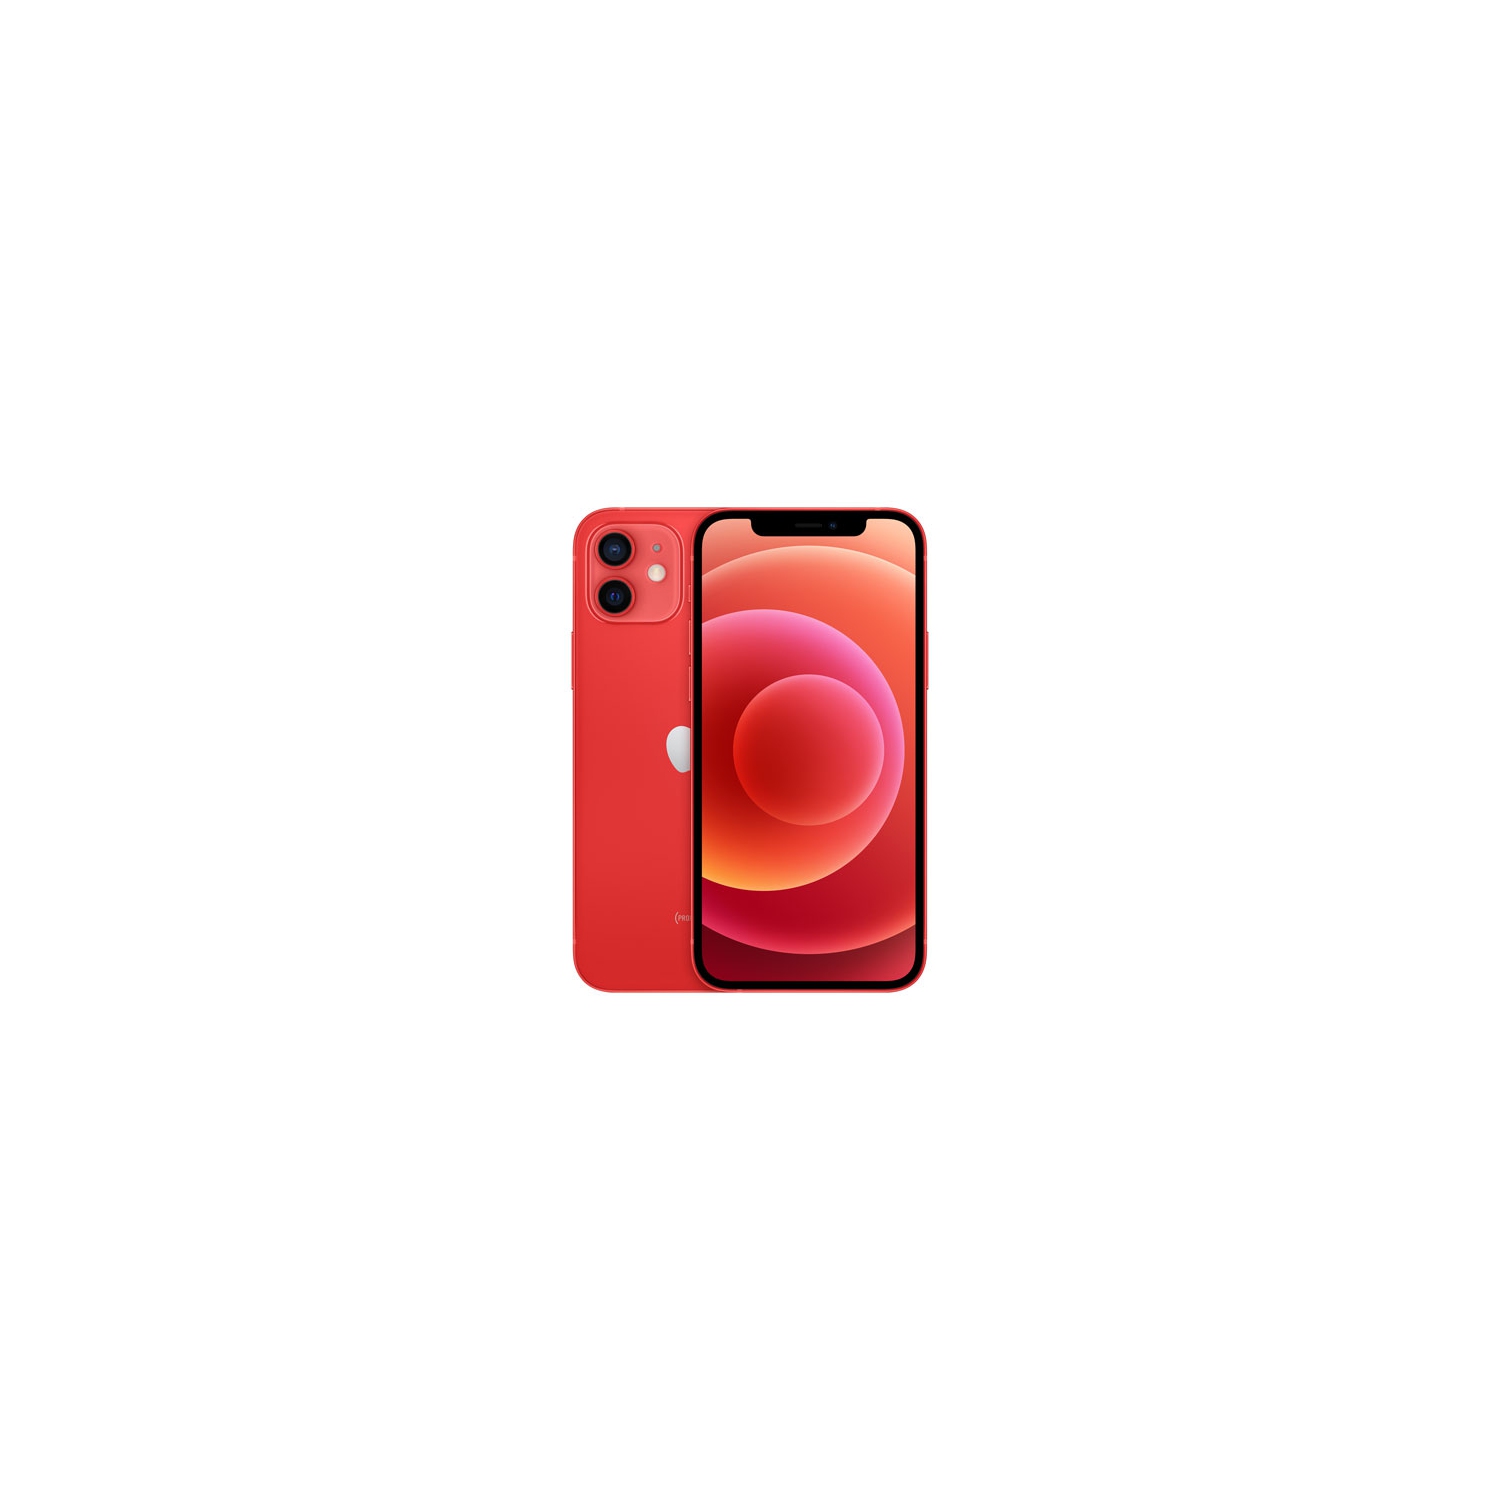 Refurbished (Good) - Apple iPhone 12 128GB Smartphone - (PRODUCT) RED - Unlocked